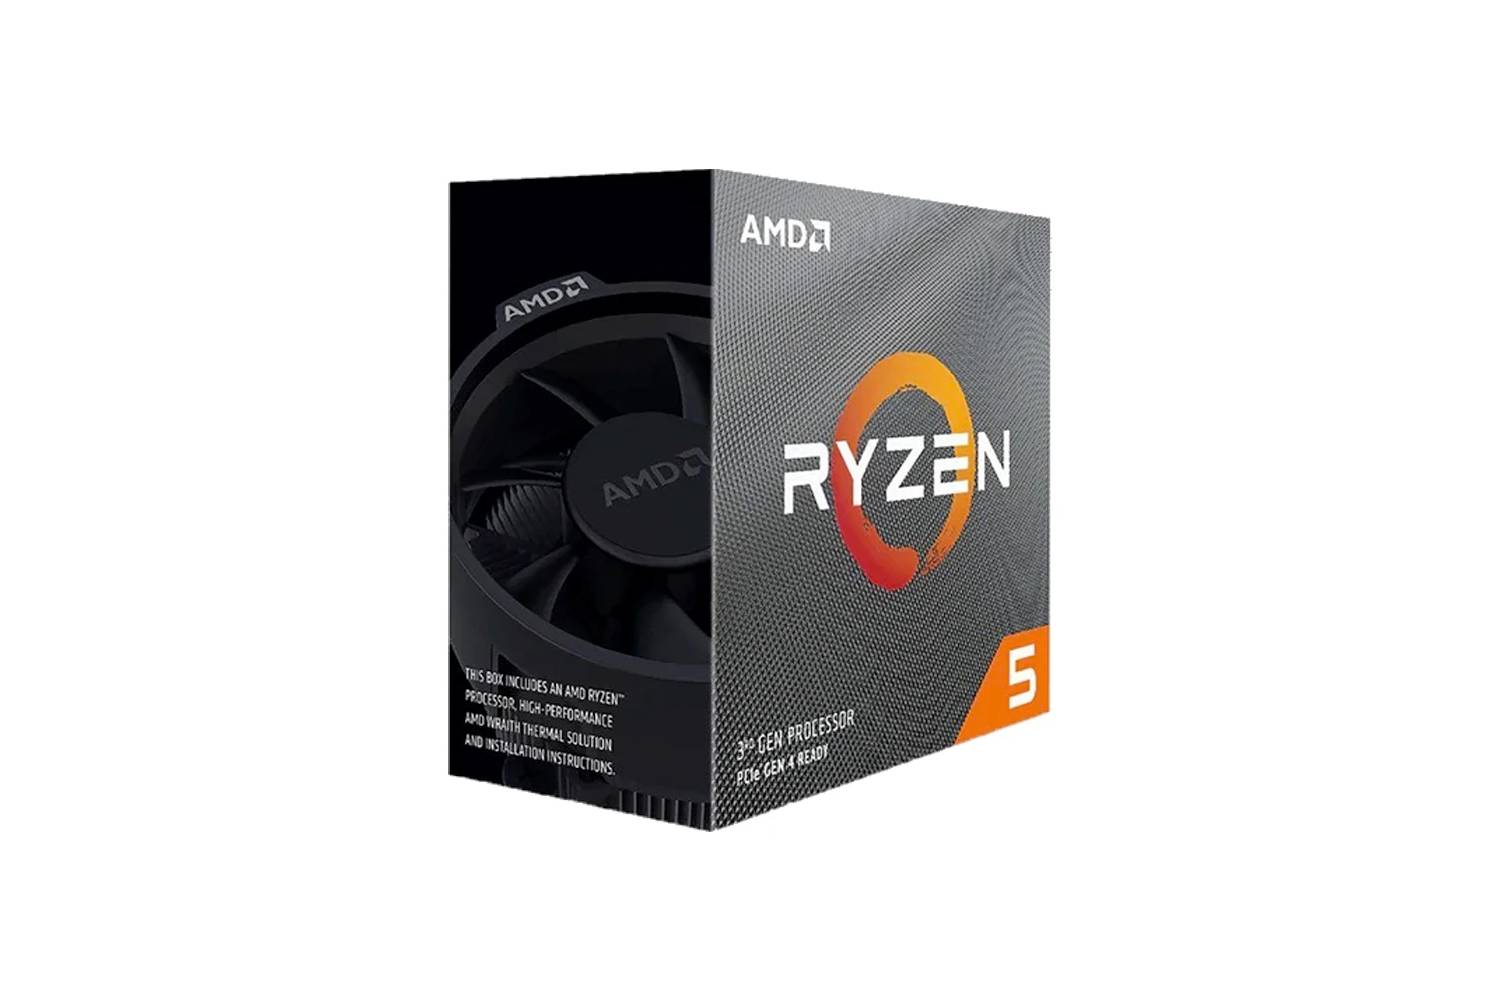 AMD Ryzen5 3400G with Radeon RX Vega 11 Graphics CPU